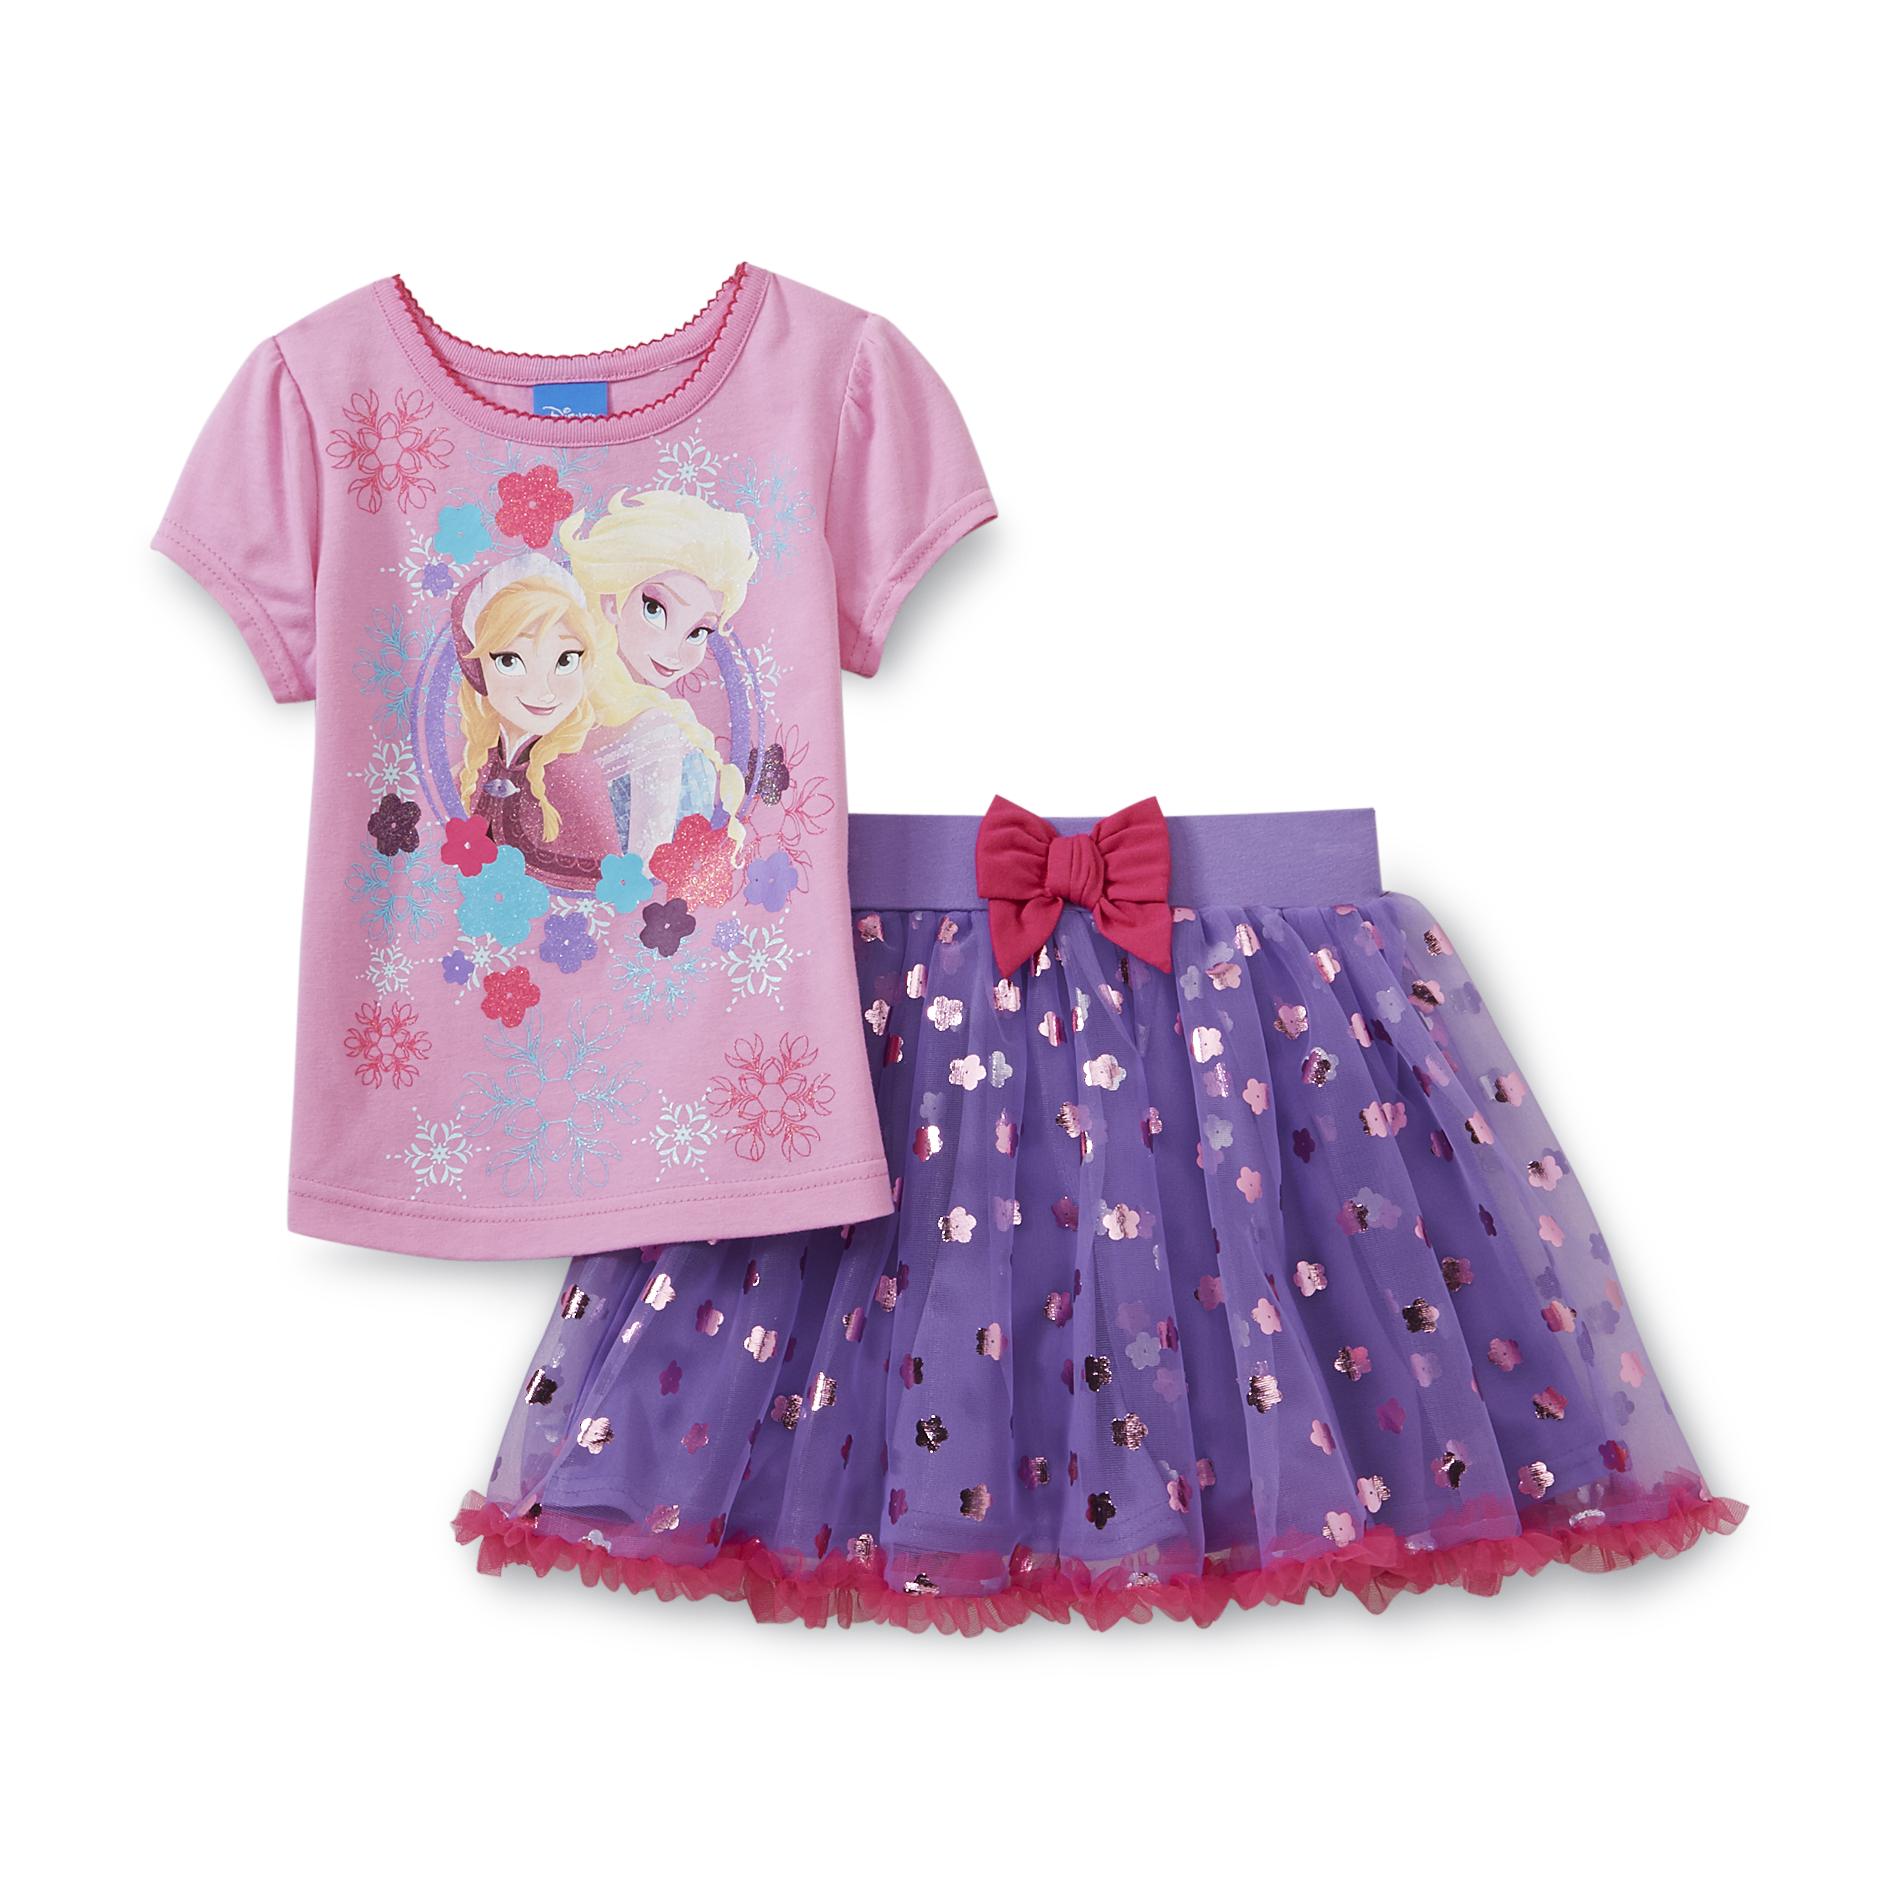 Disney Frozen Toddler Girl's Graphic T-Shirt & Tutu Skirt - Elsa & Anna